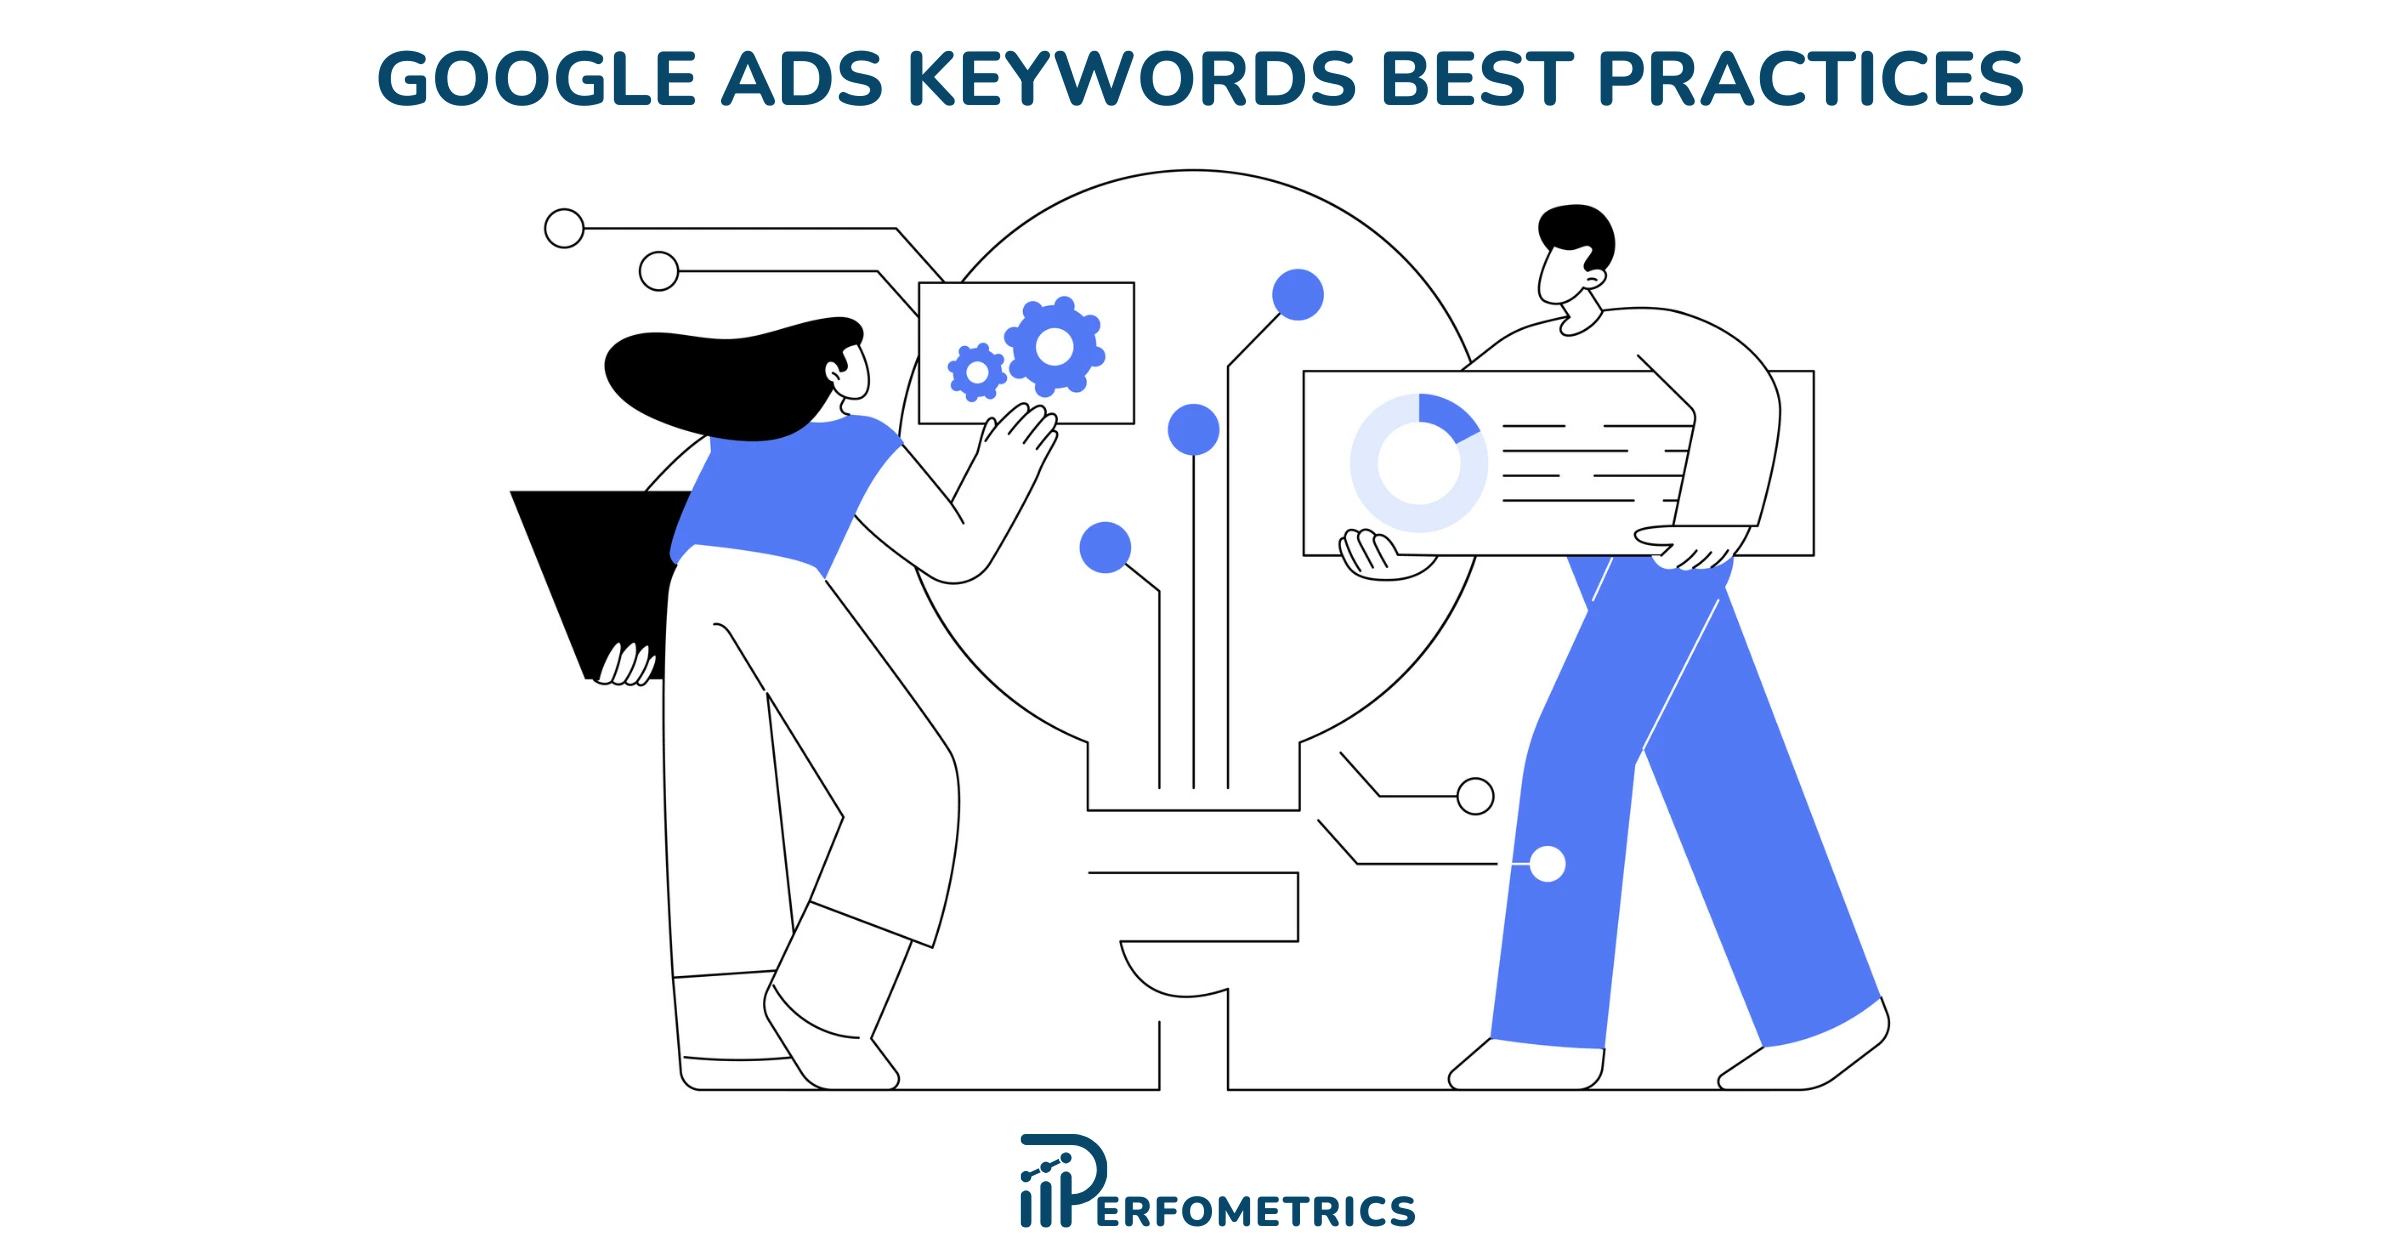 Keywords Best Practices in Google Ads